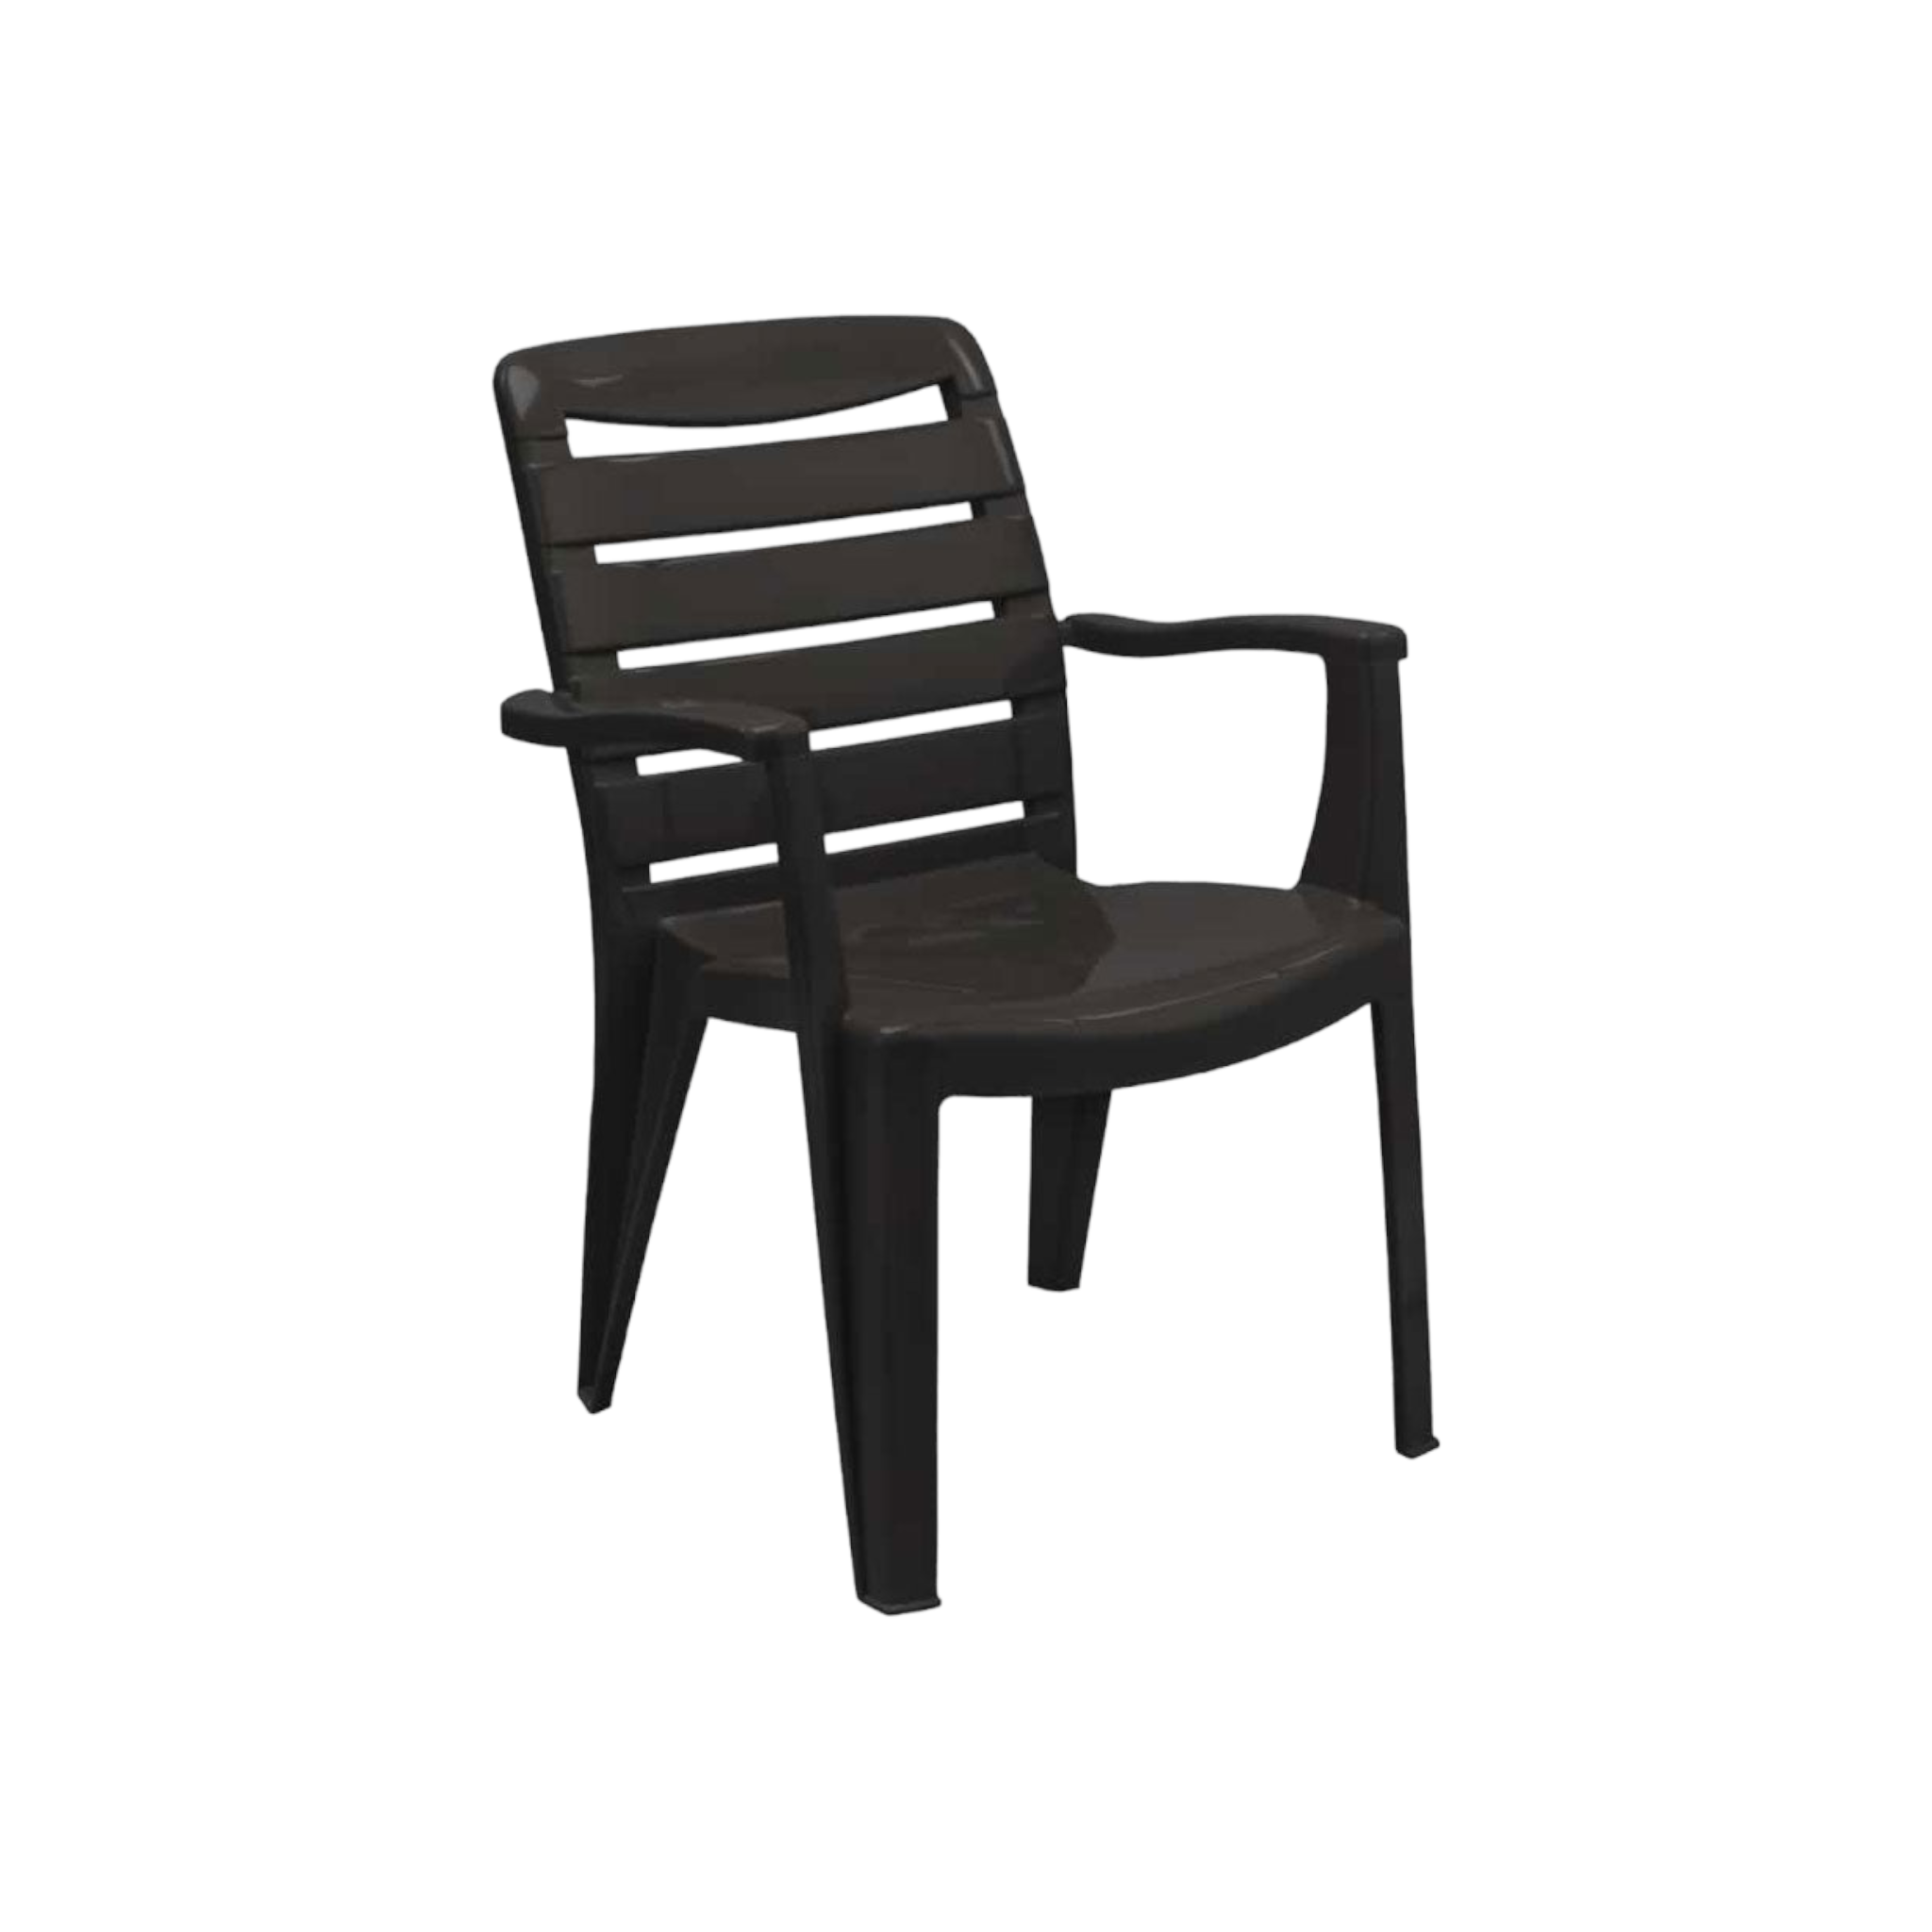 Contour Outdoor Mia Chair High Back Black